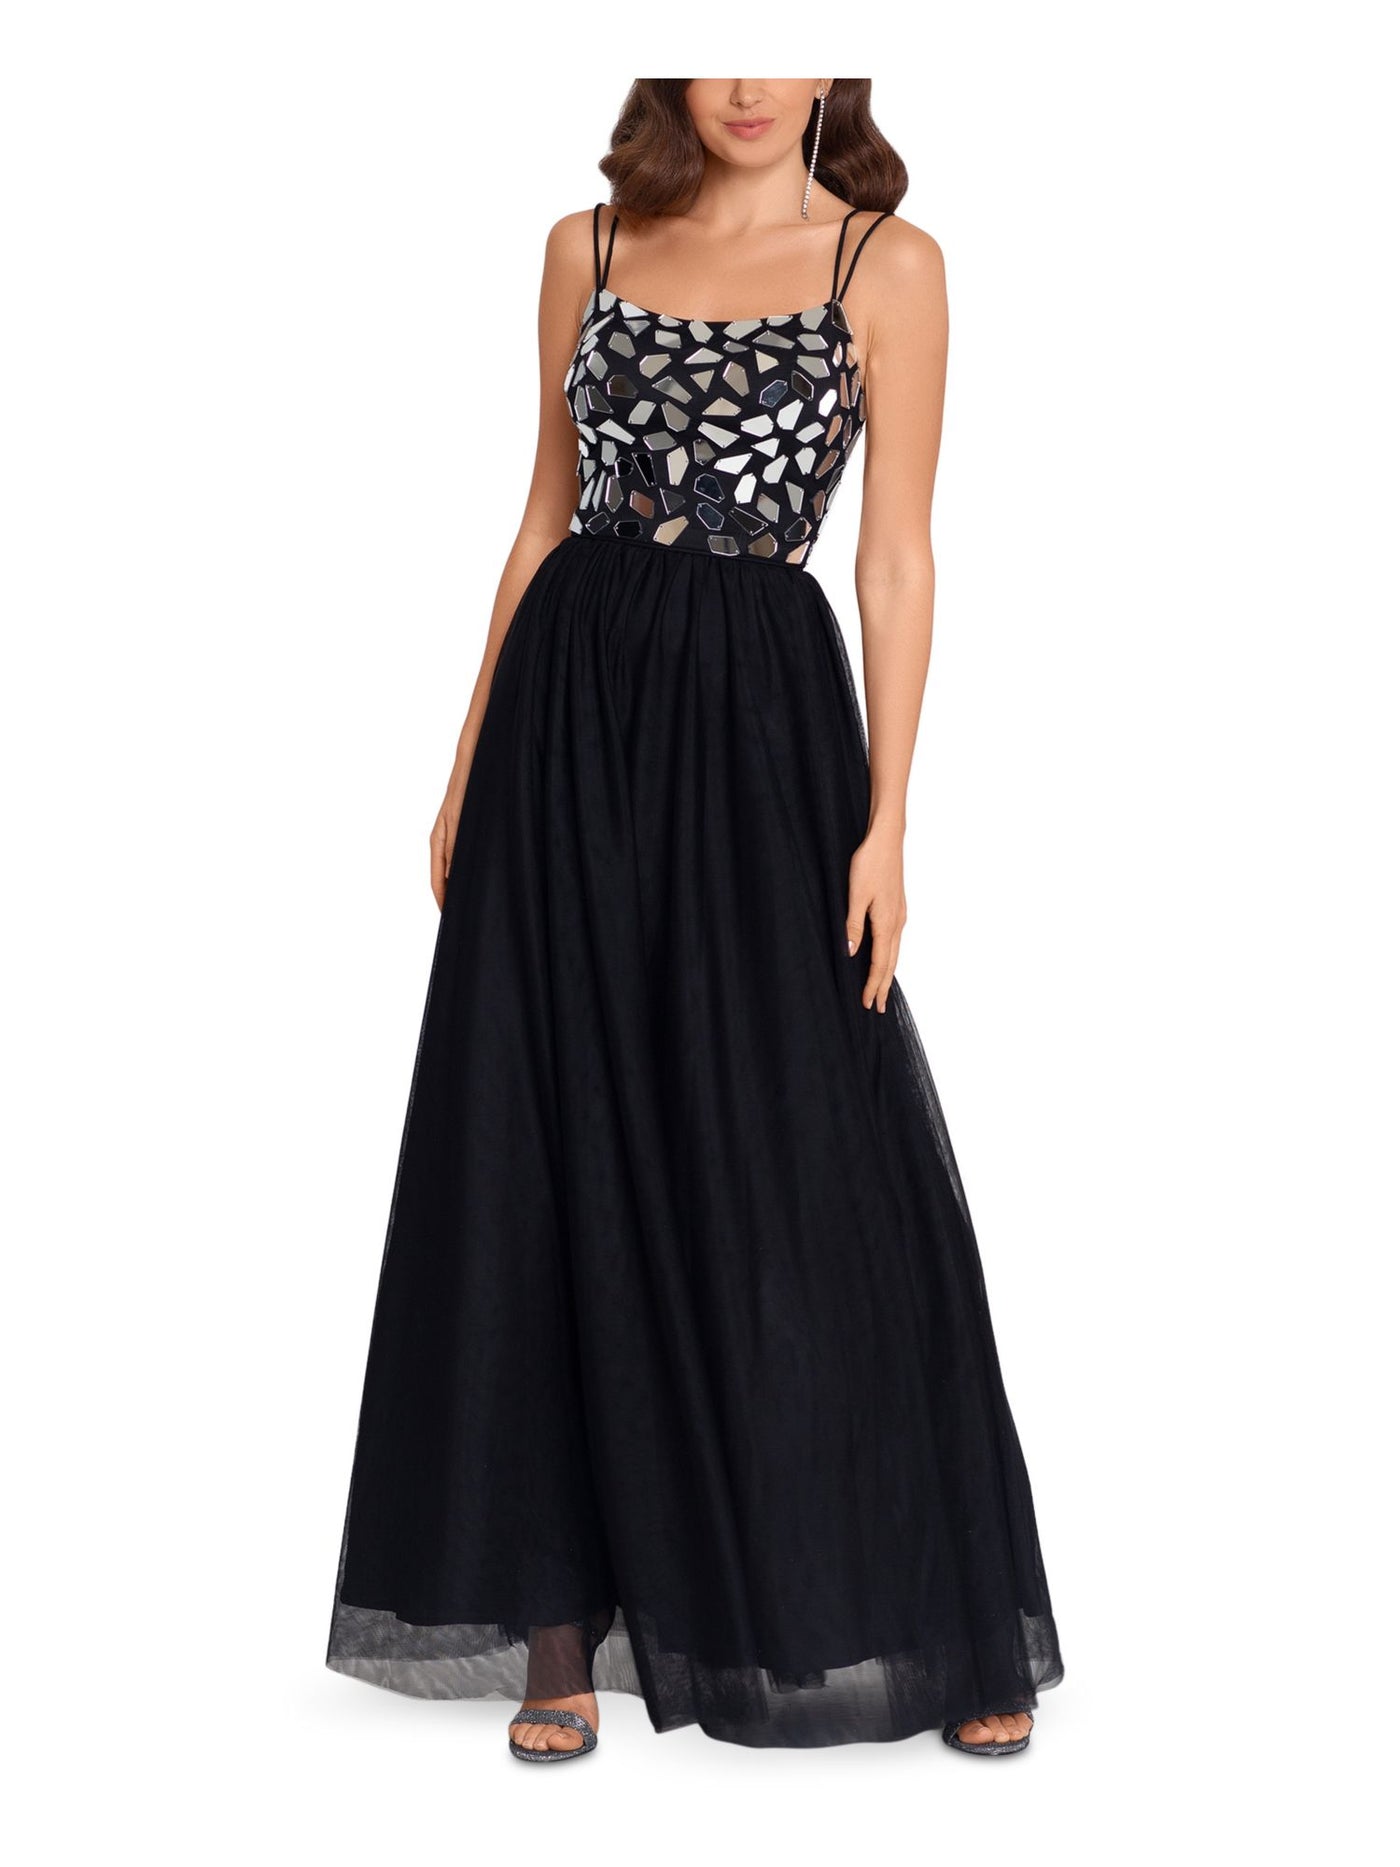 BLONDIE Womens Black Embellished Spaghetti Strap Scoop Neck Full-Length Formal Fit + Flare Dress Juniors 5